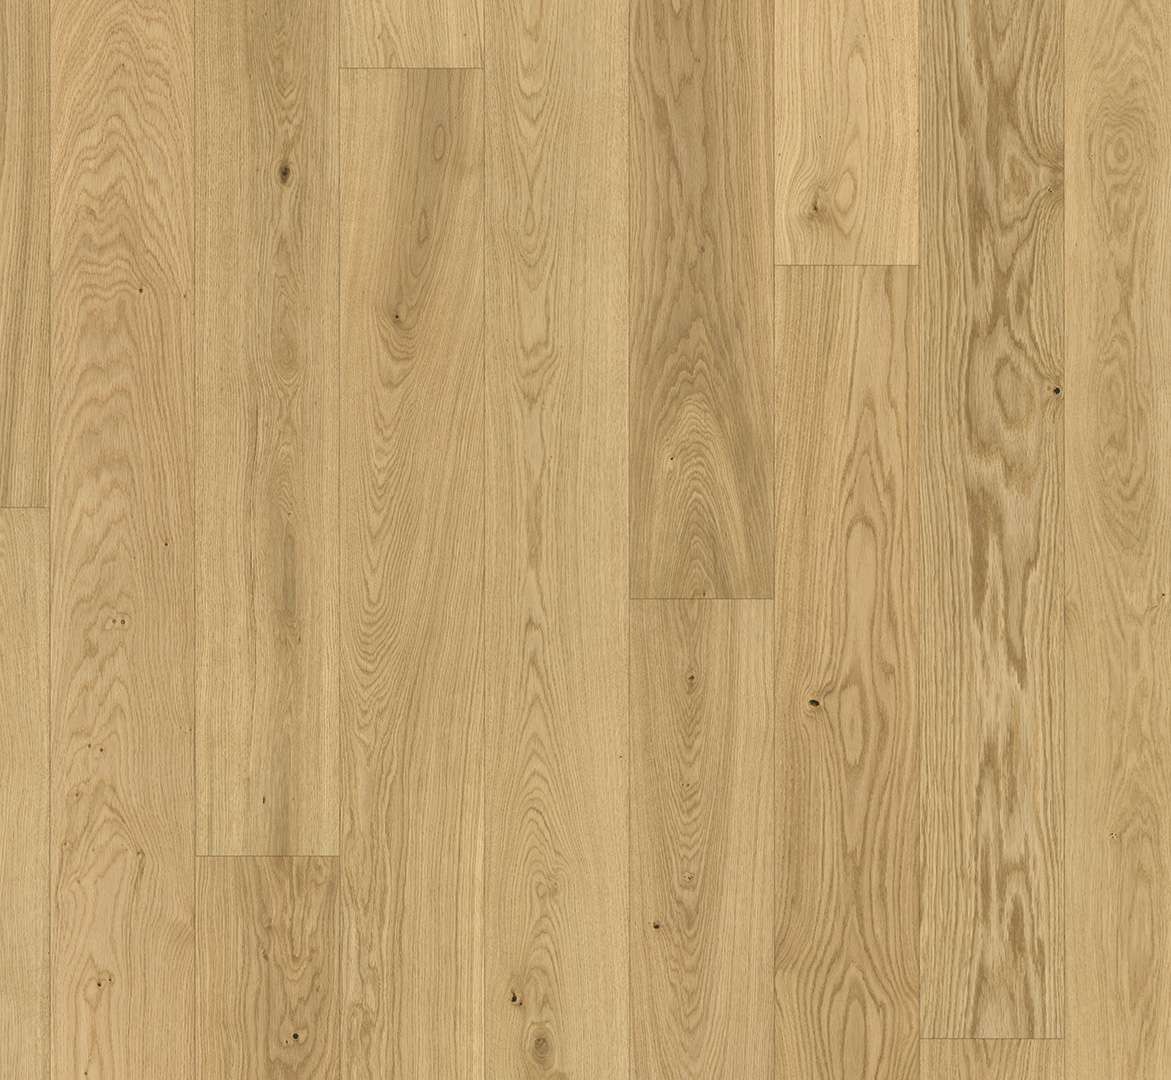 PARADOR Classic 3060 (Dub - Natur - olej) 1739903 - dřevěná třívrstvá podlaha